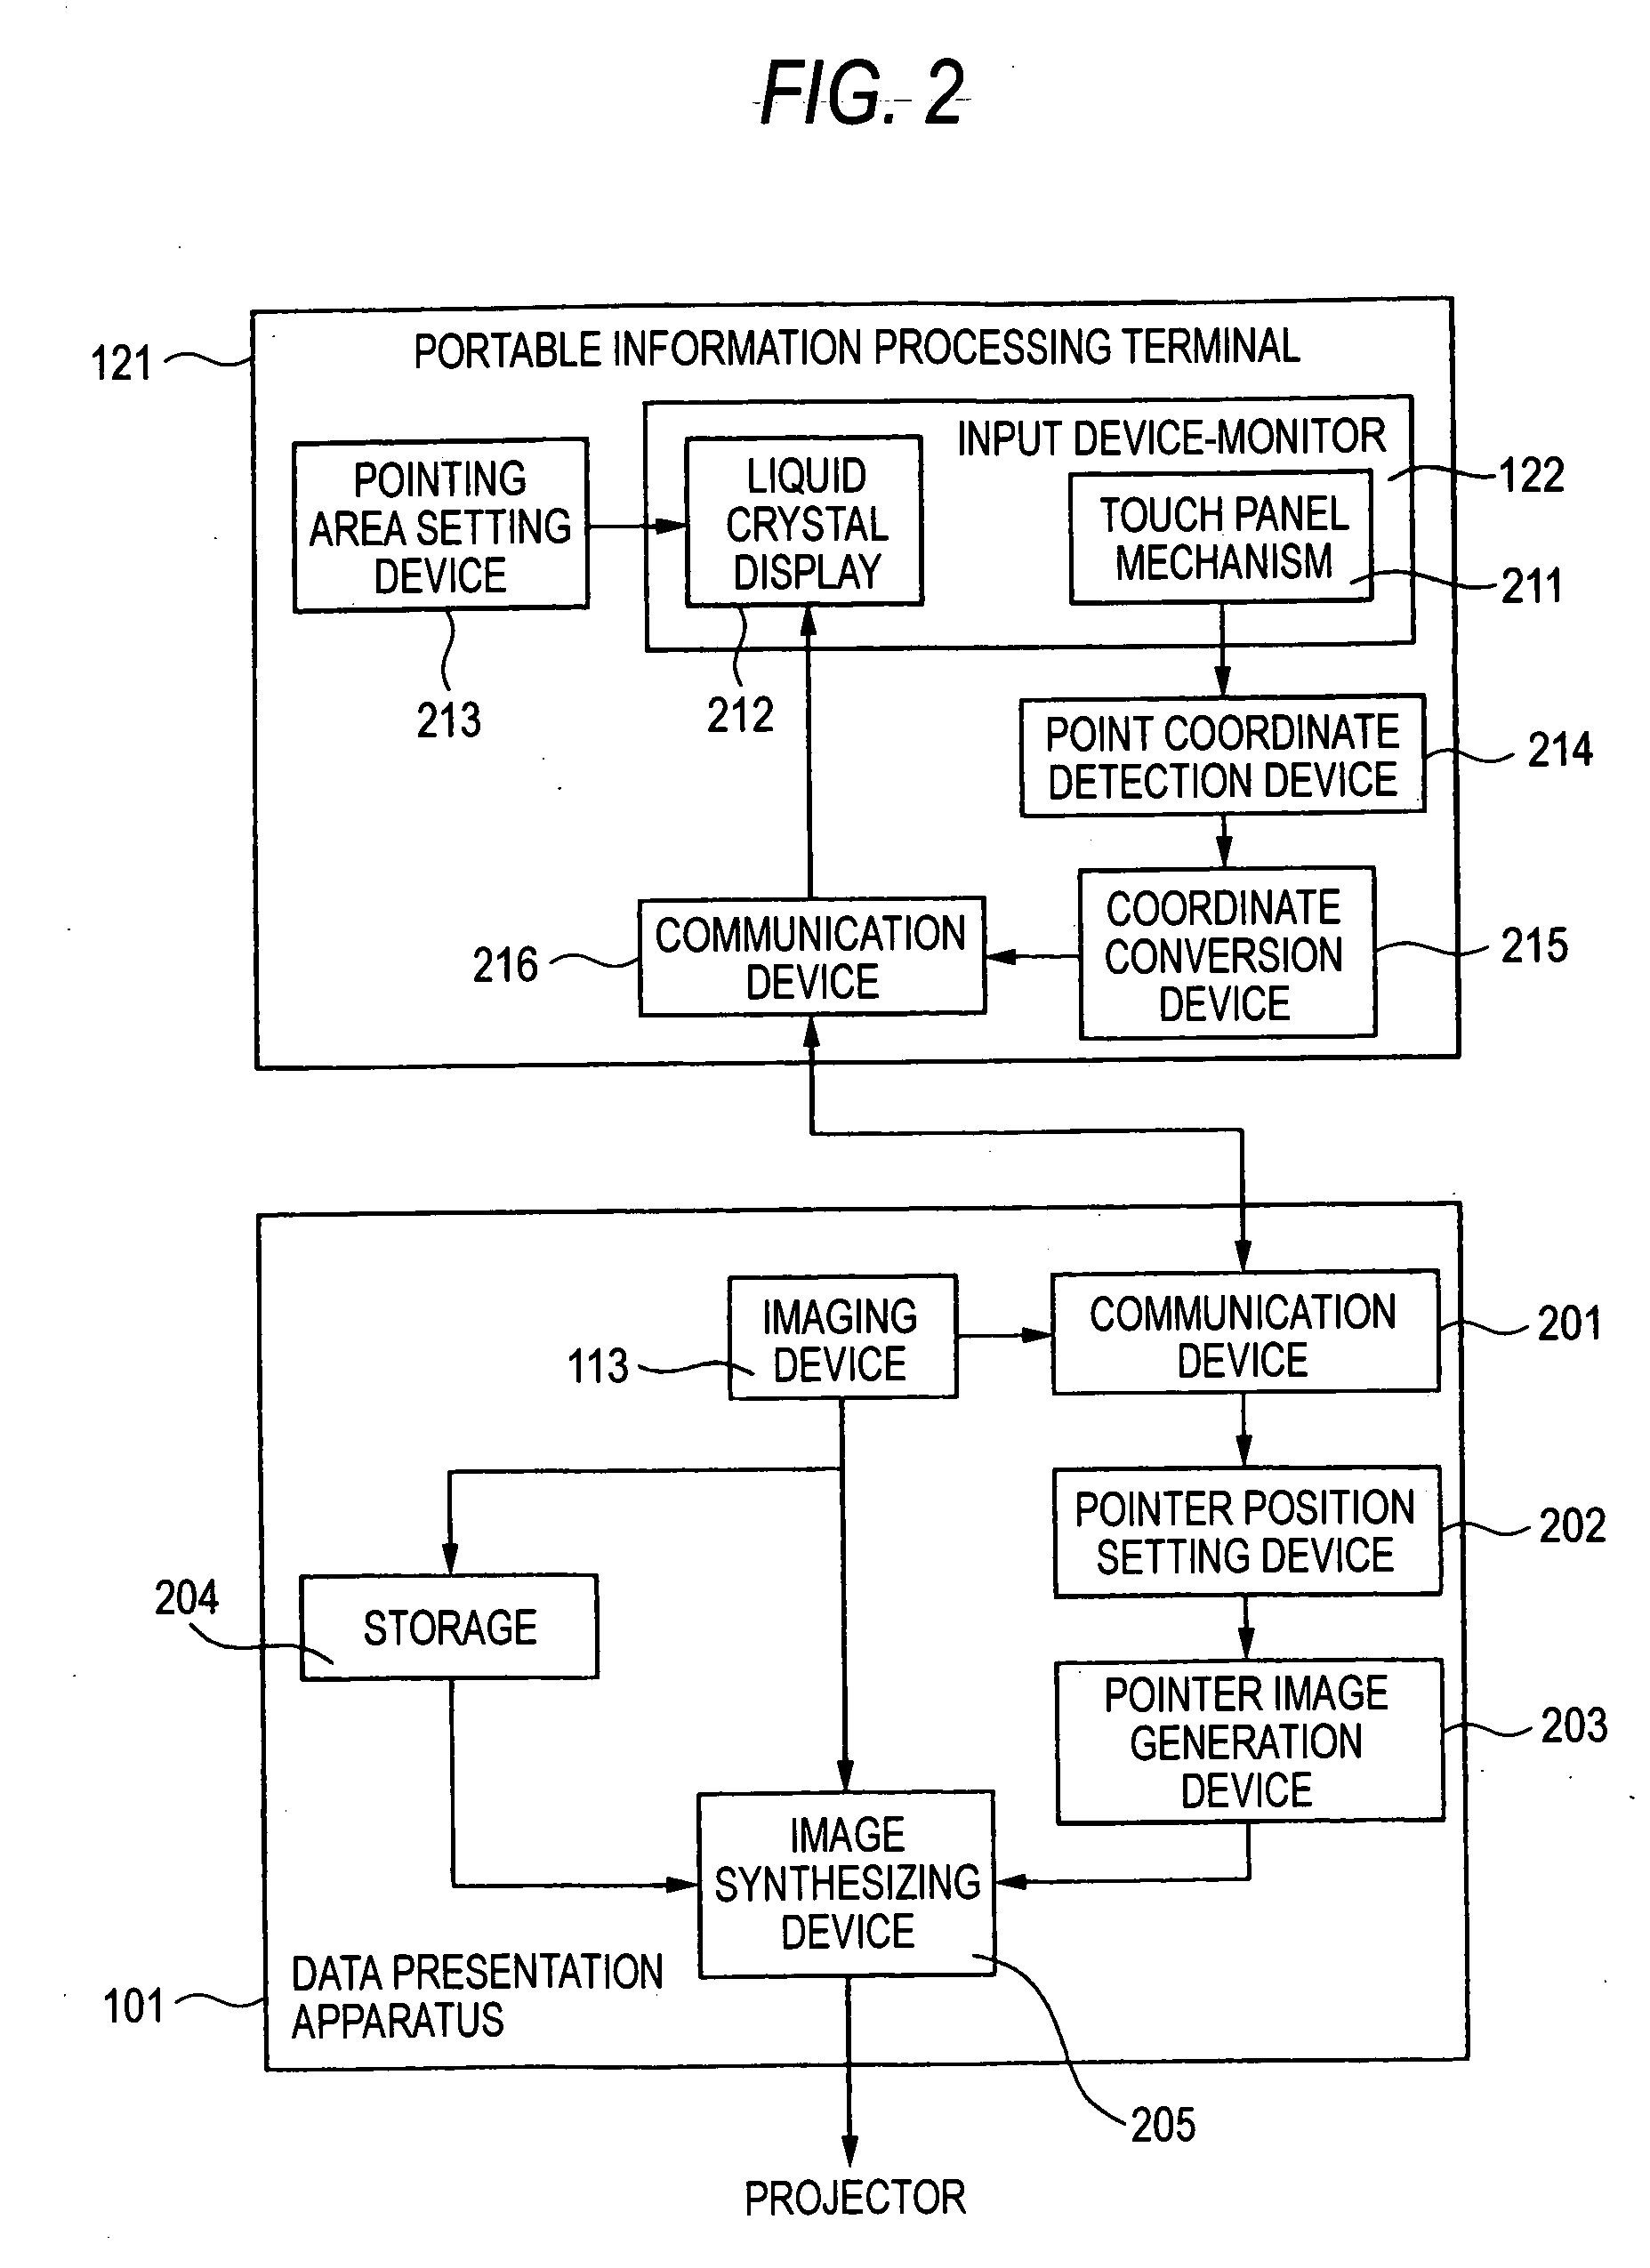 Data presentation apparatus and operation method of terminal